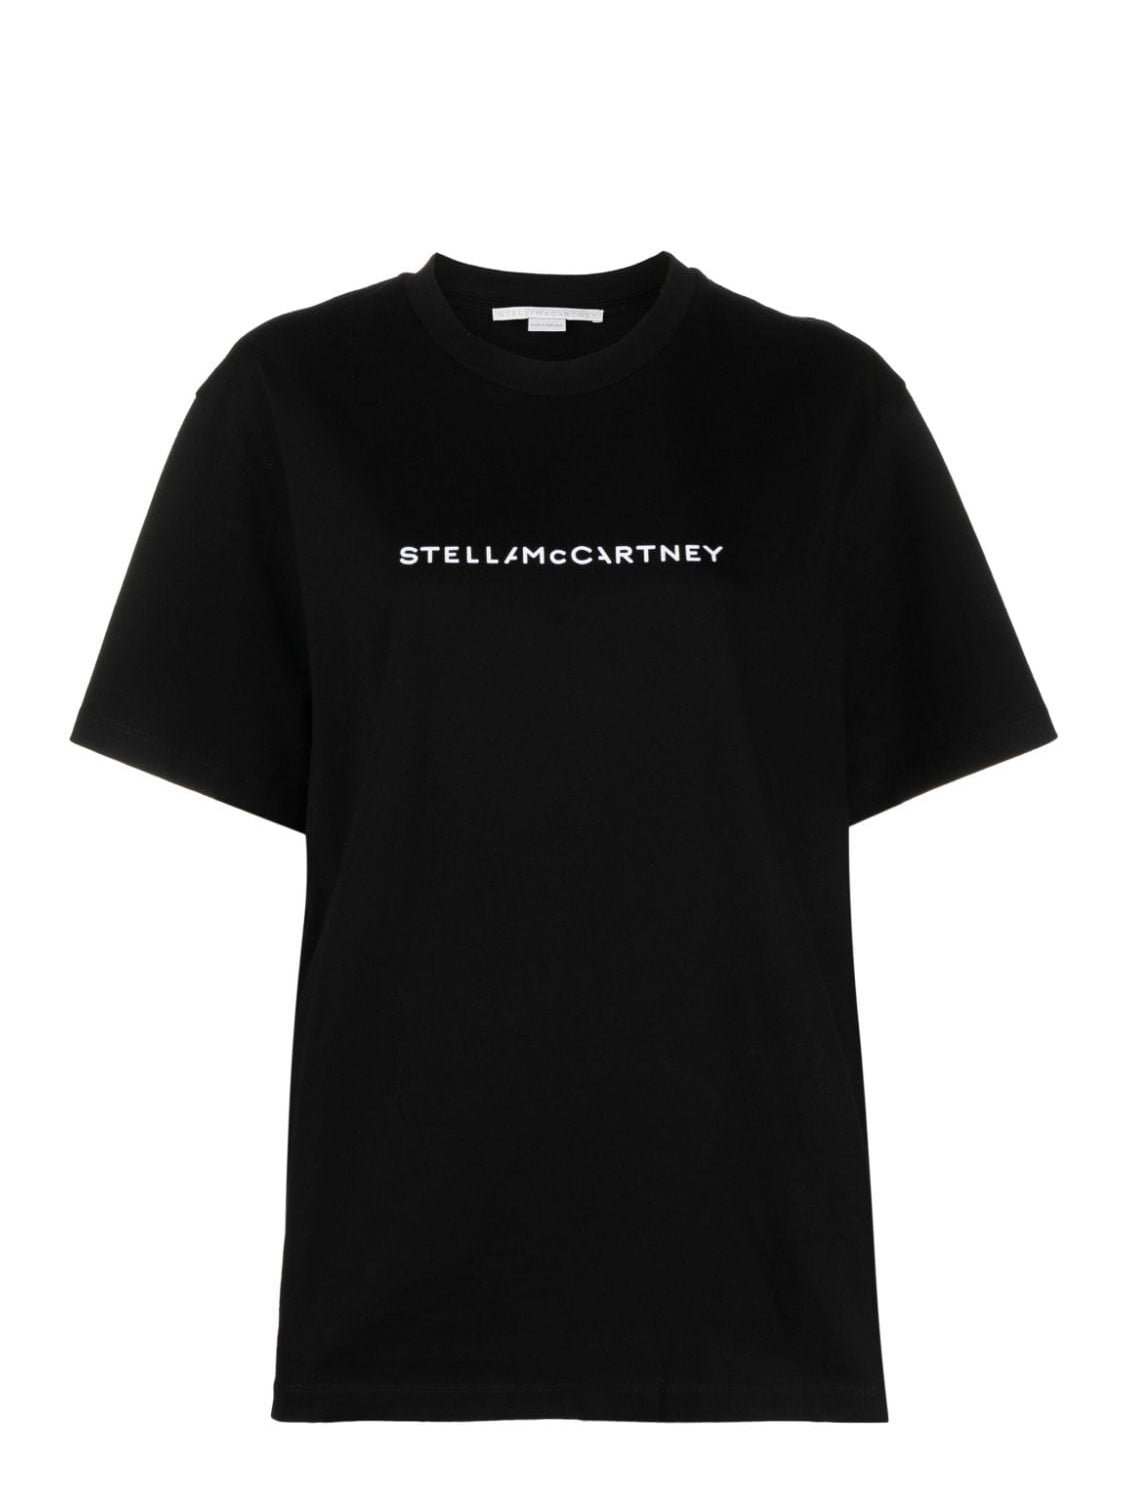 Iconic logo Print t-shirt, Black